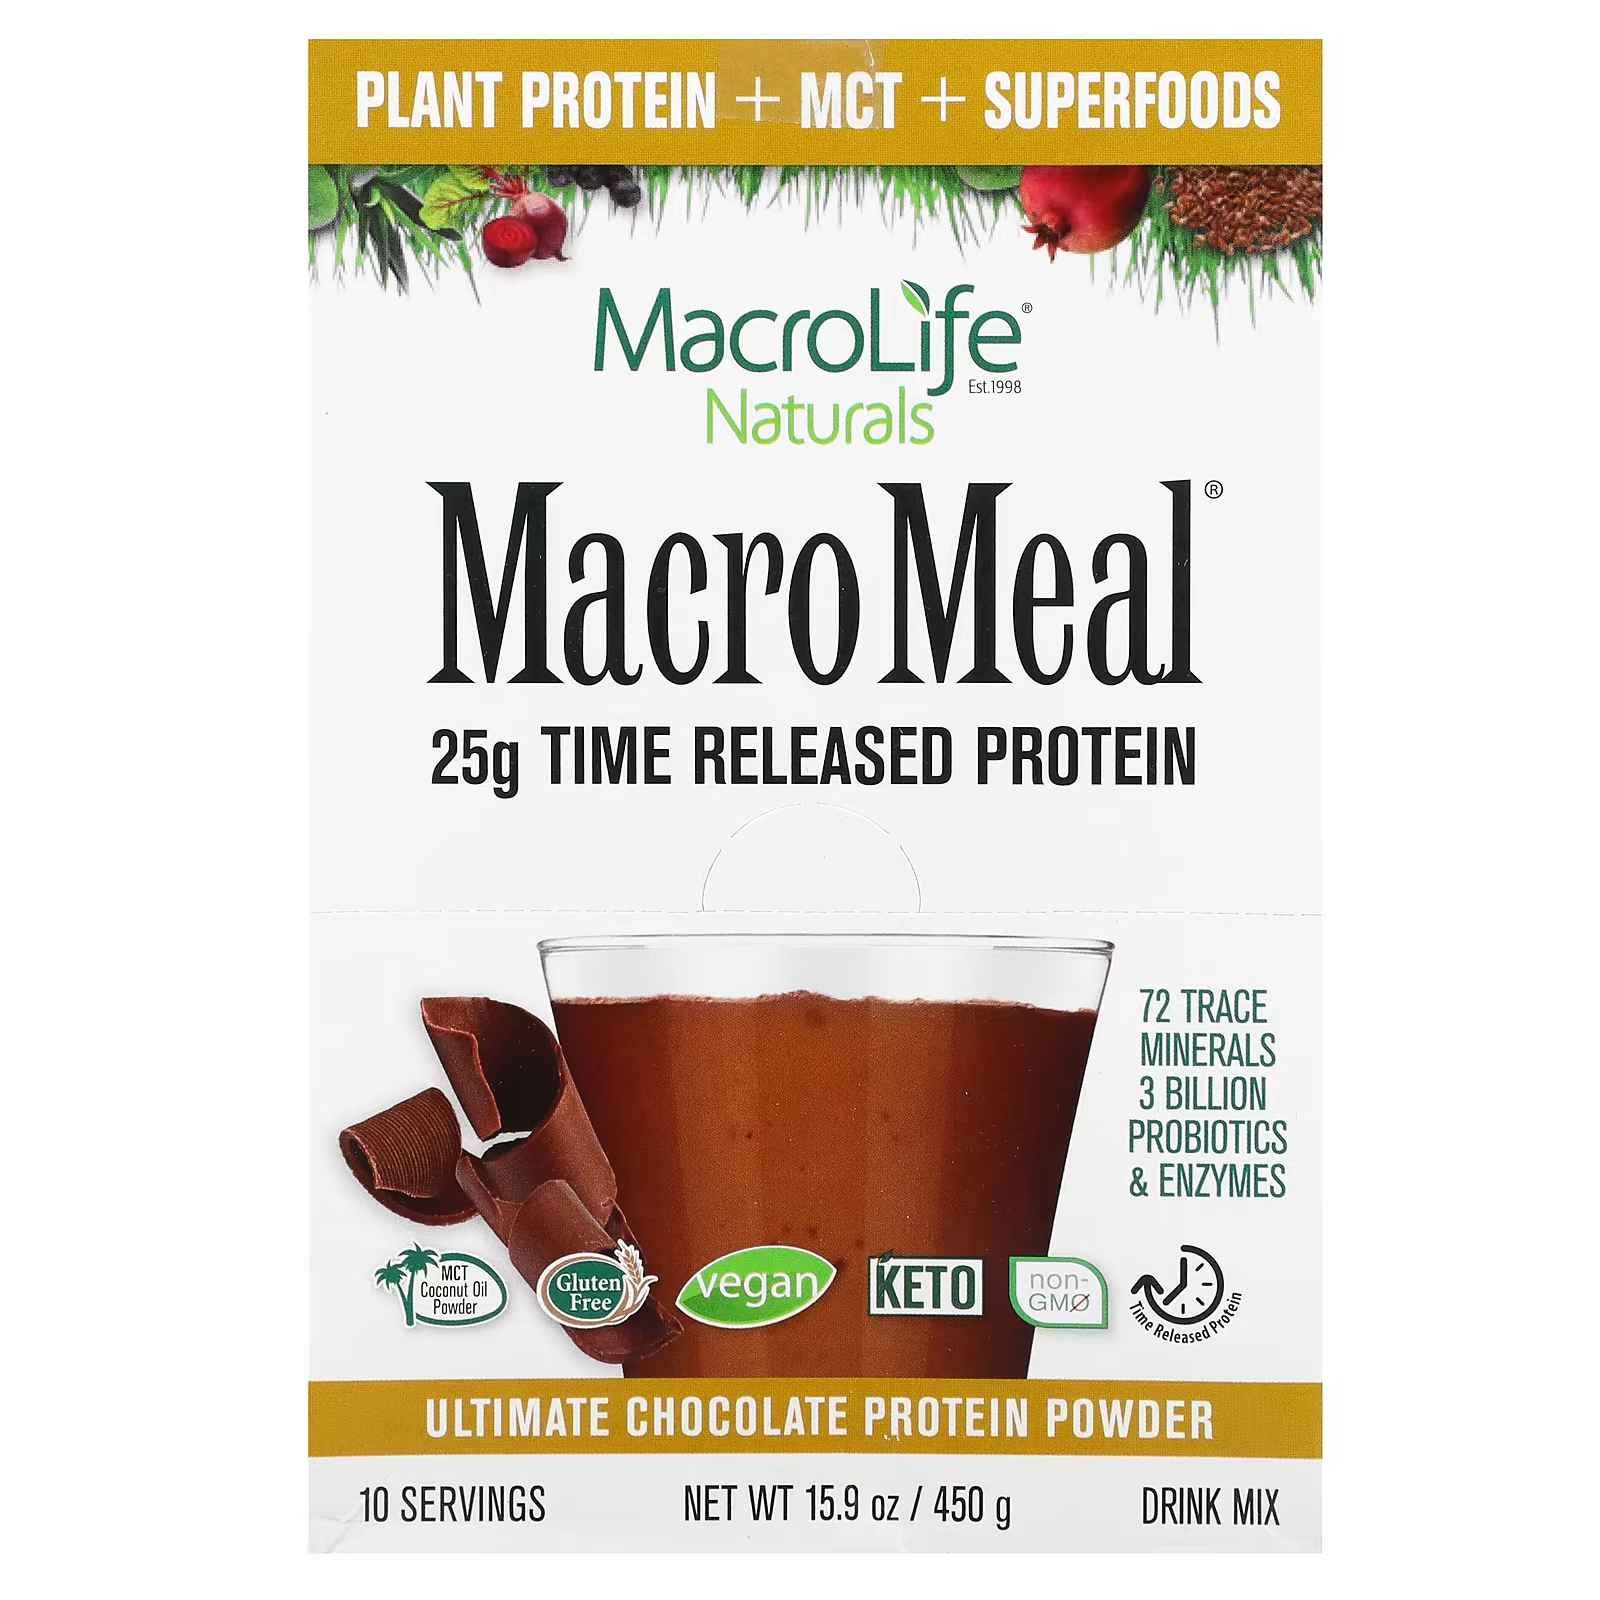 Macrolife Naturals MacroMeal Ultimate Protein Powder Chocolate 10 пакетов по 1,6 унции (45 г) каждый